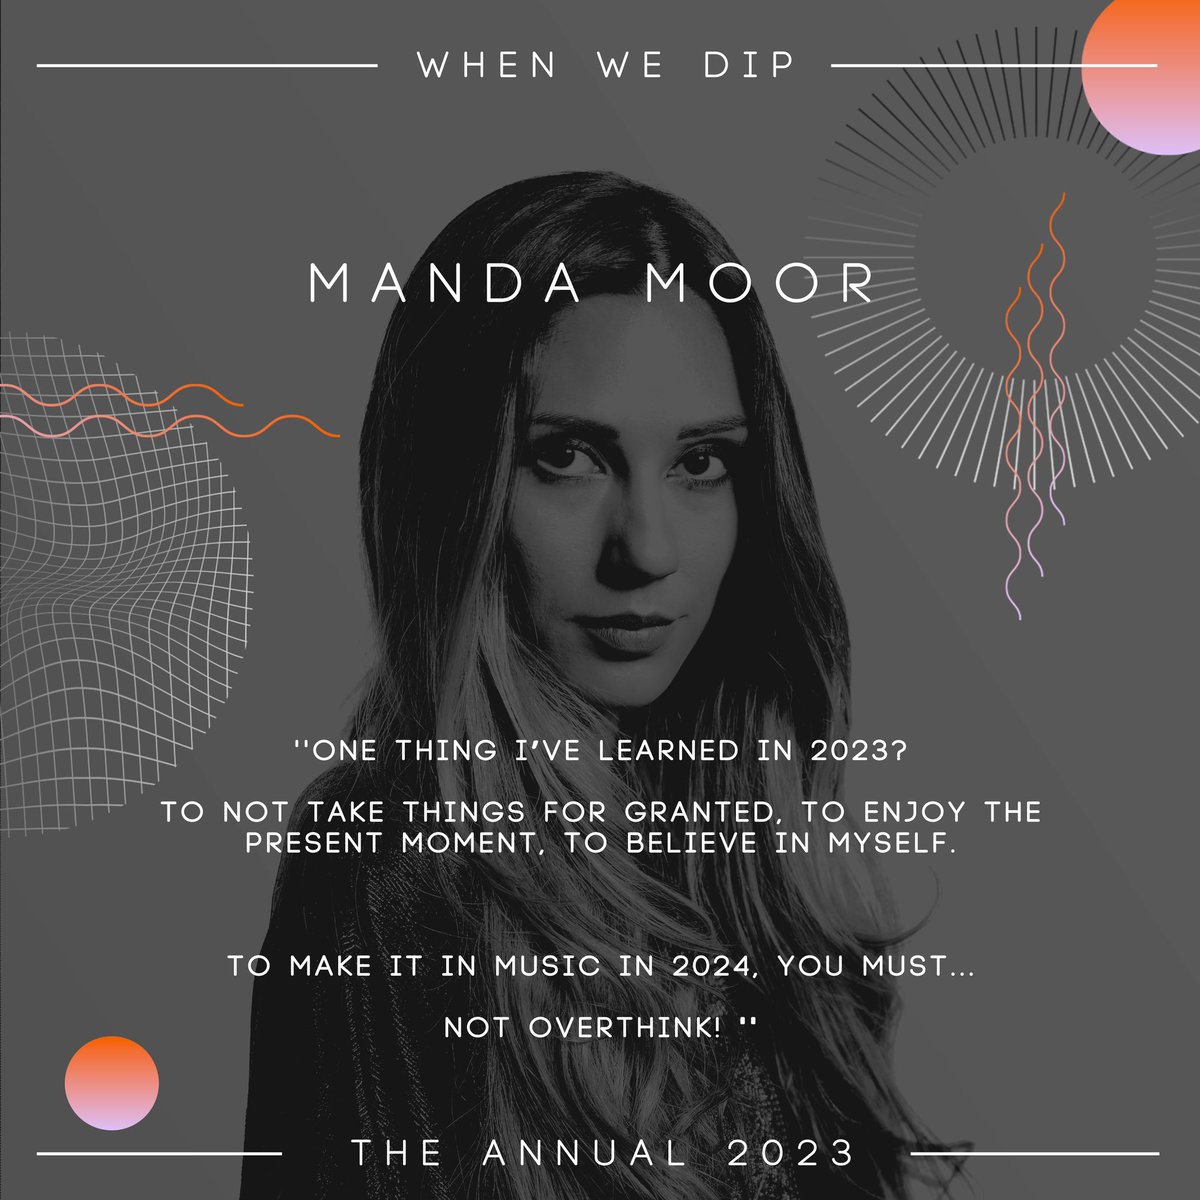 Manda Moor x The Annual 2023 presented by When We Dip 🎶 Read the full annual (Link in bio 👆) @mandamoormusic